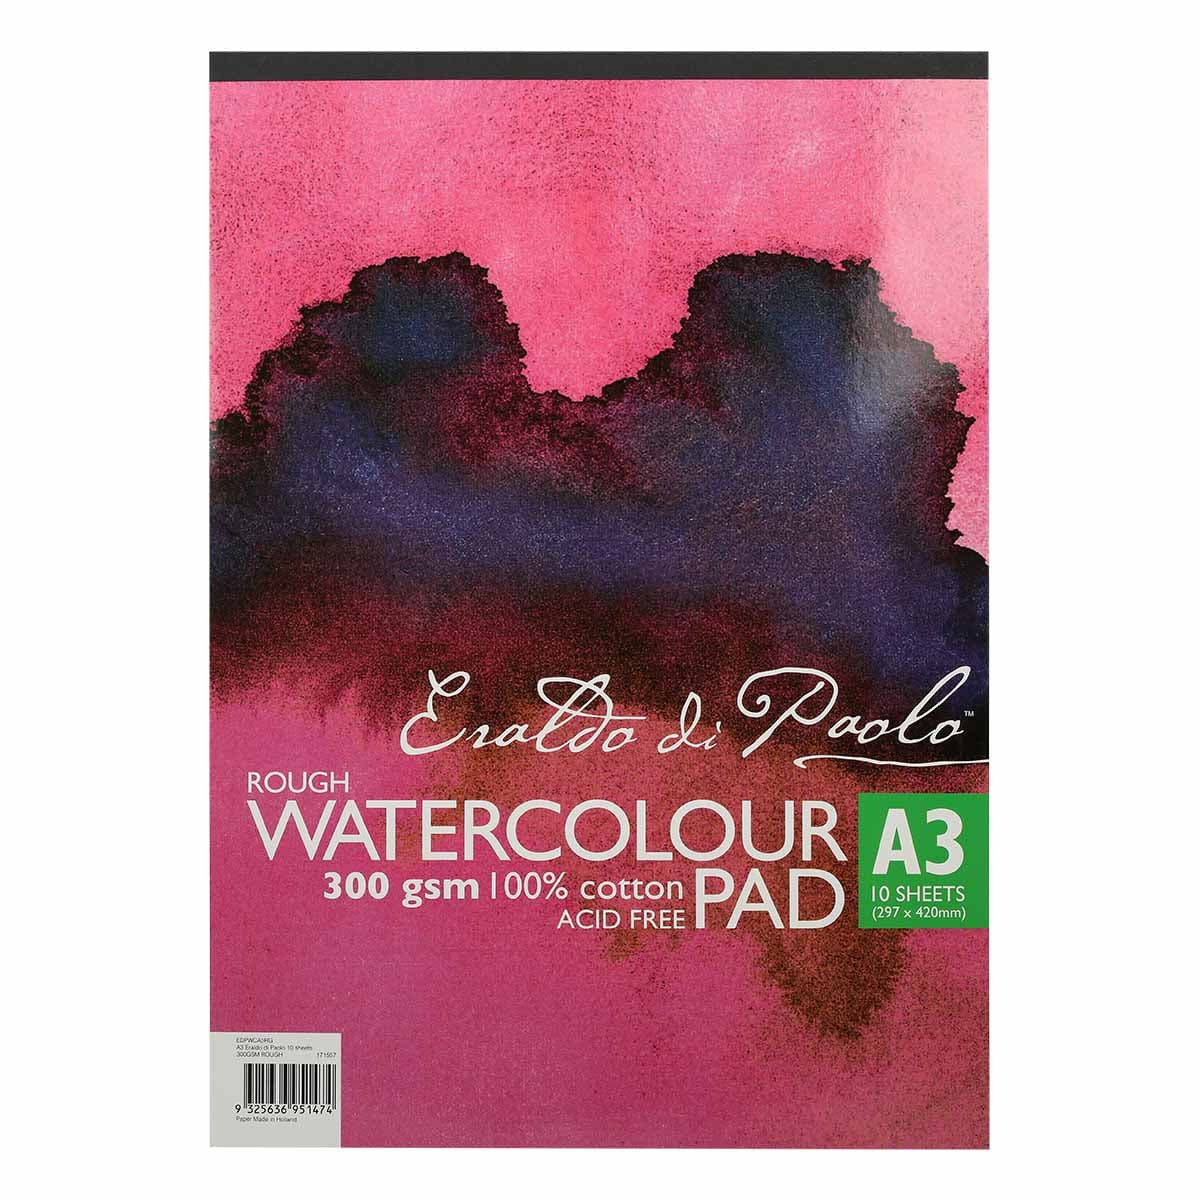 Image of Eraldo Di Paolo Watercolour Pad Rough 300gsm A3 10 Sheets